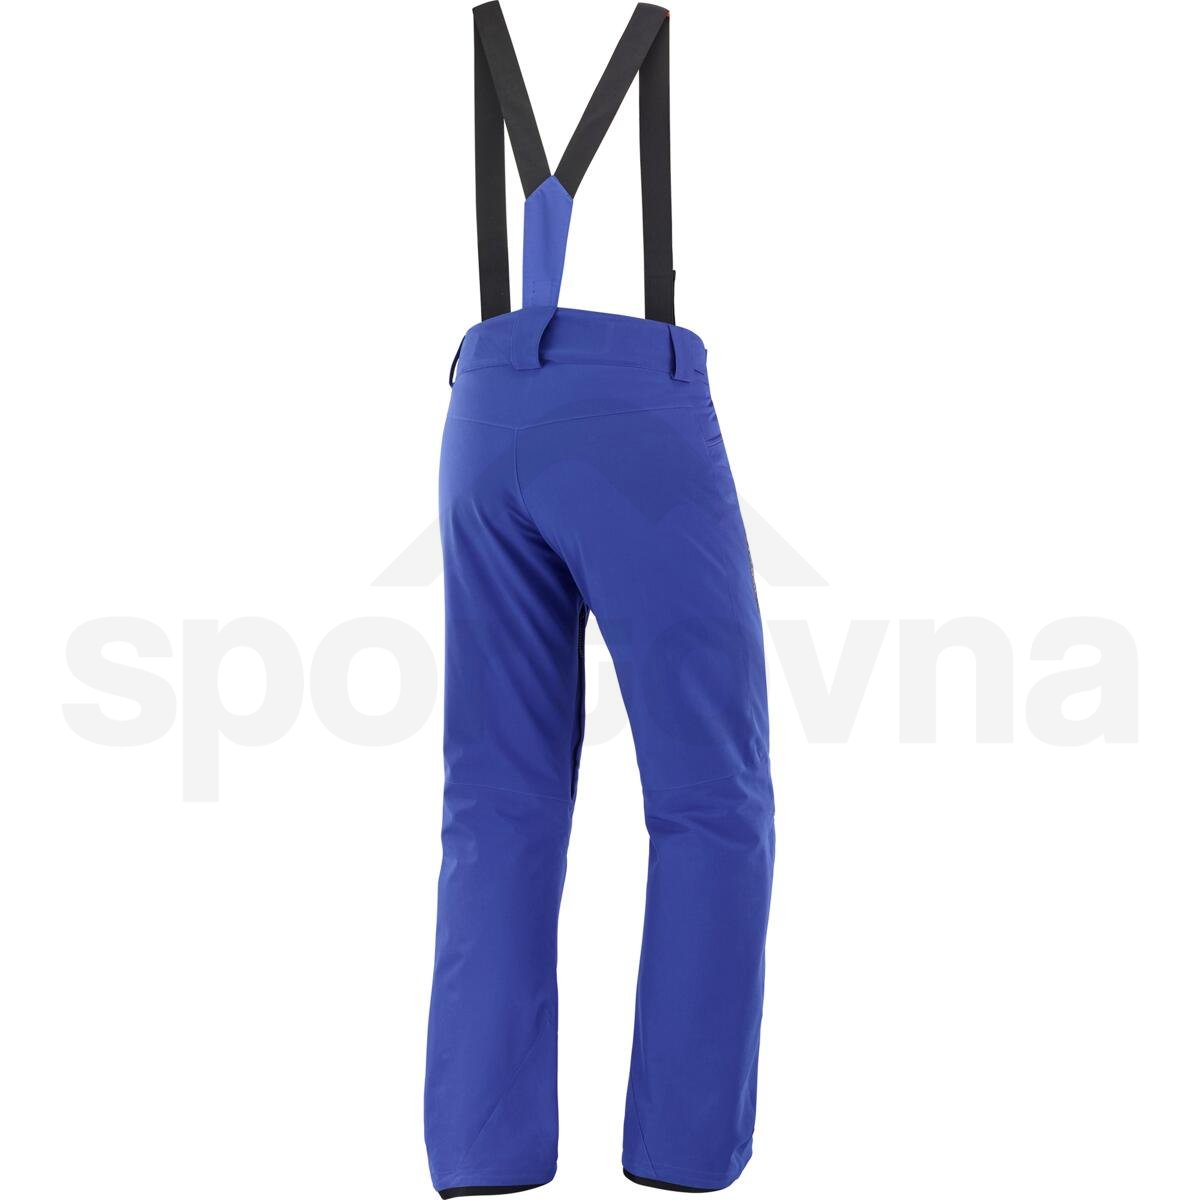 Kalhoty Salomon Edge Pant M - modrá (standardní délka)